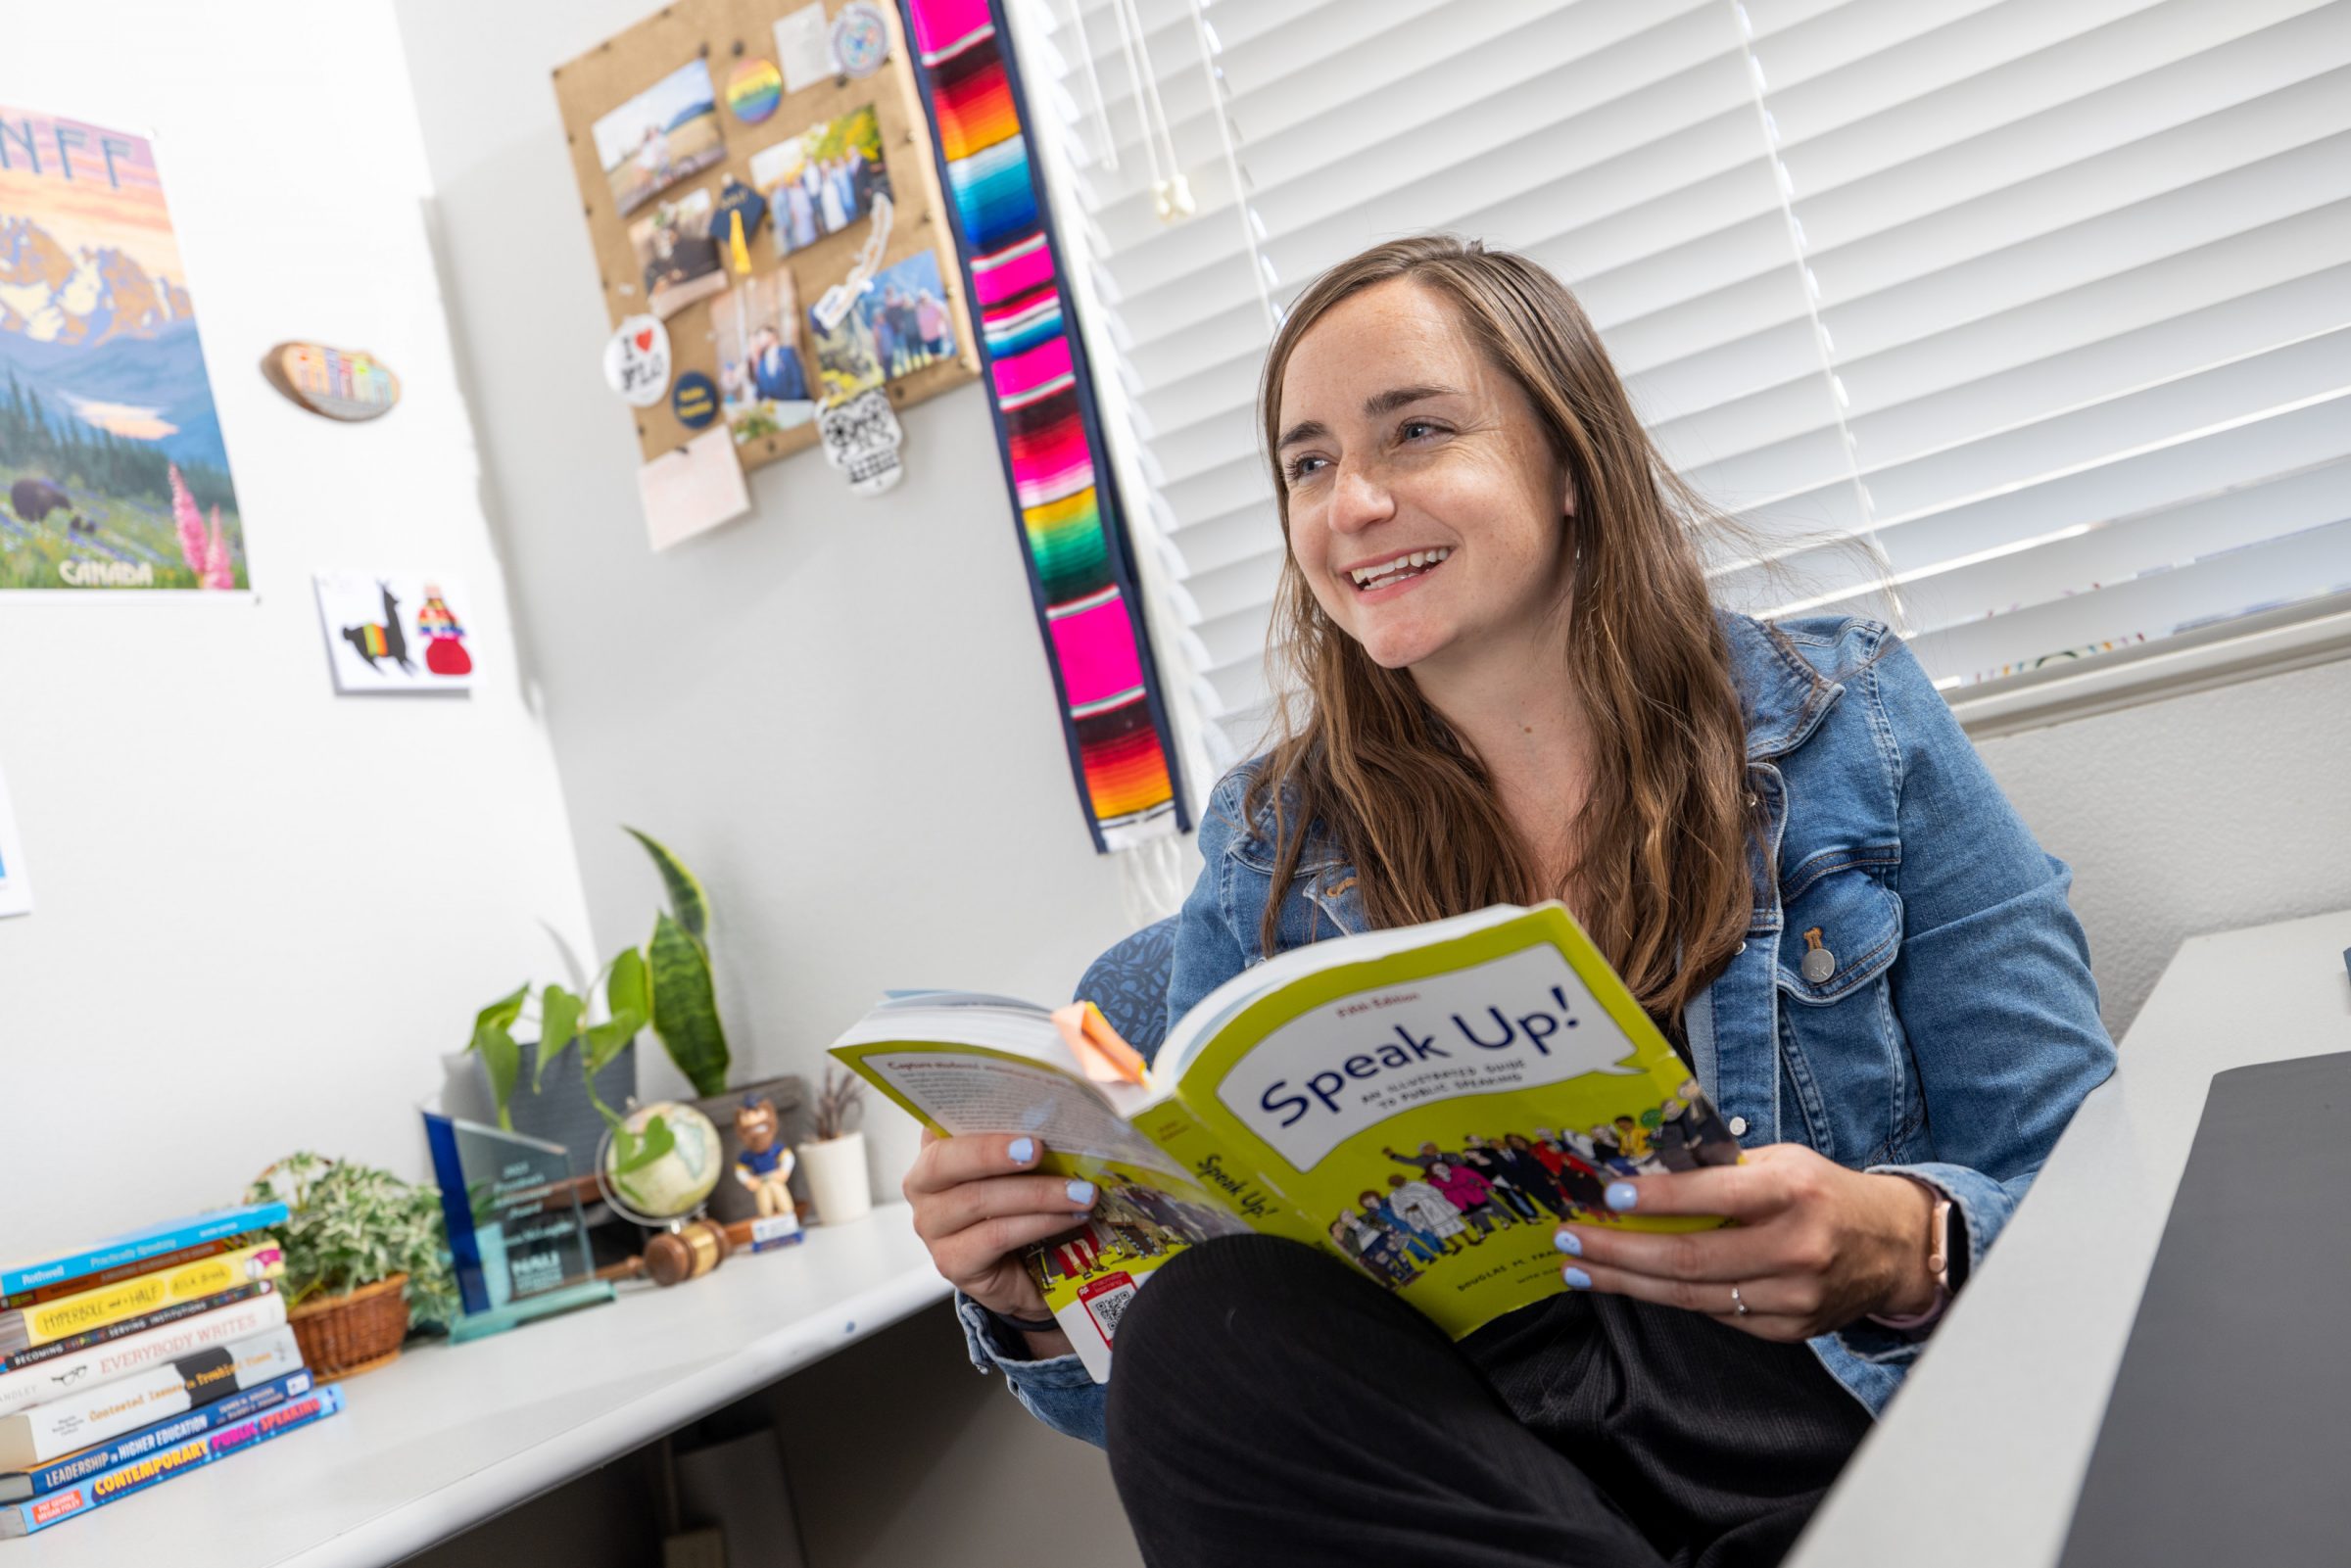 McKenzie McLoughlin reads a book called "Speak Up!" in her office.